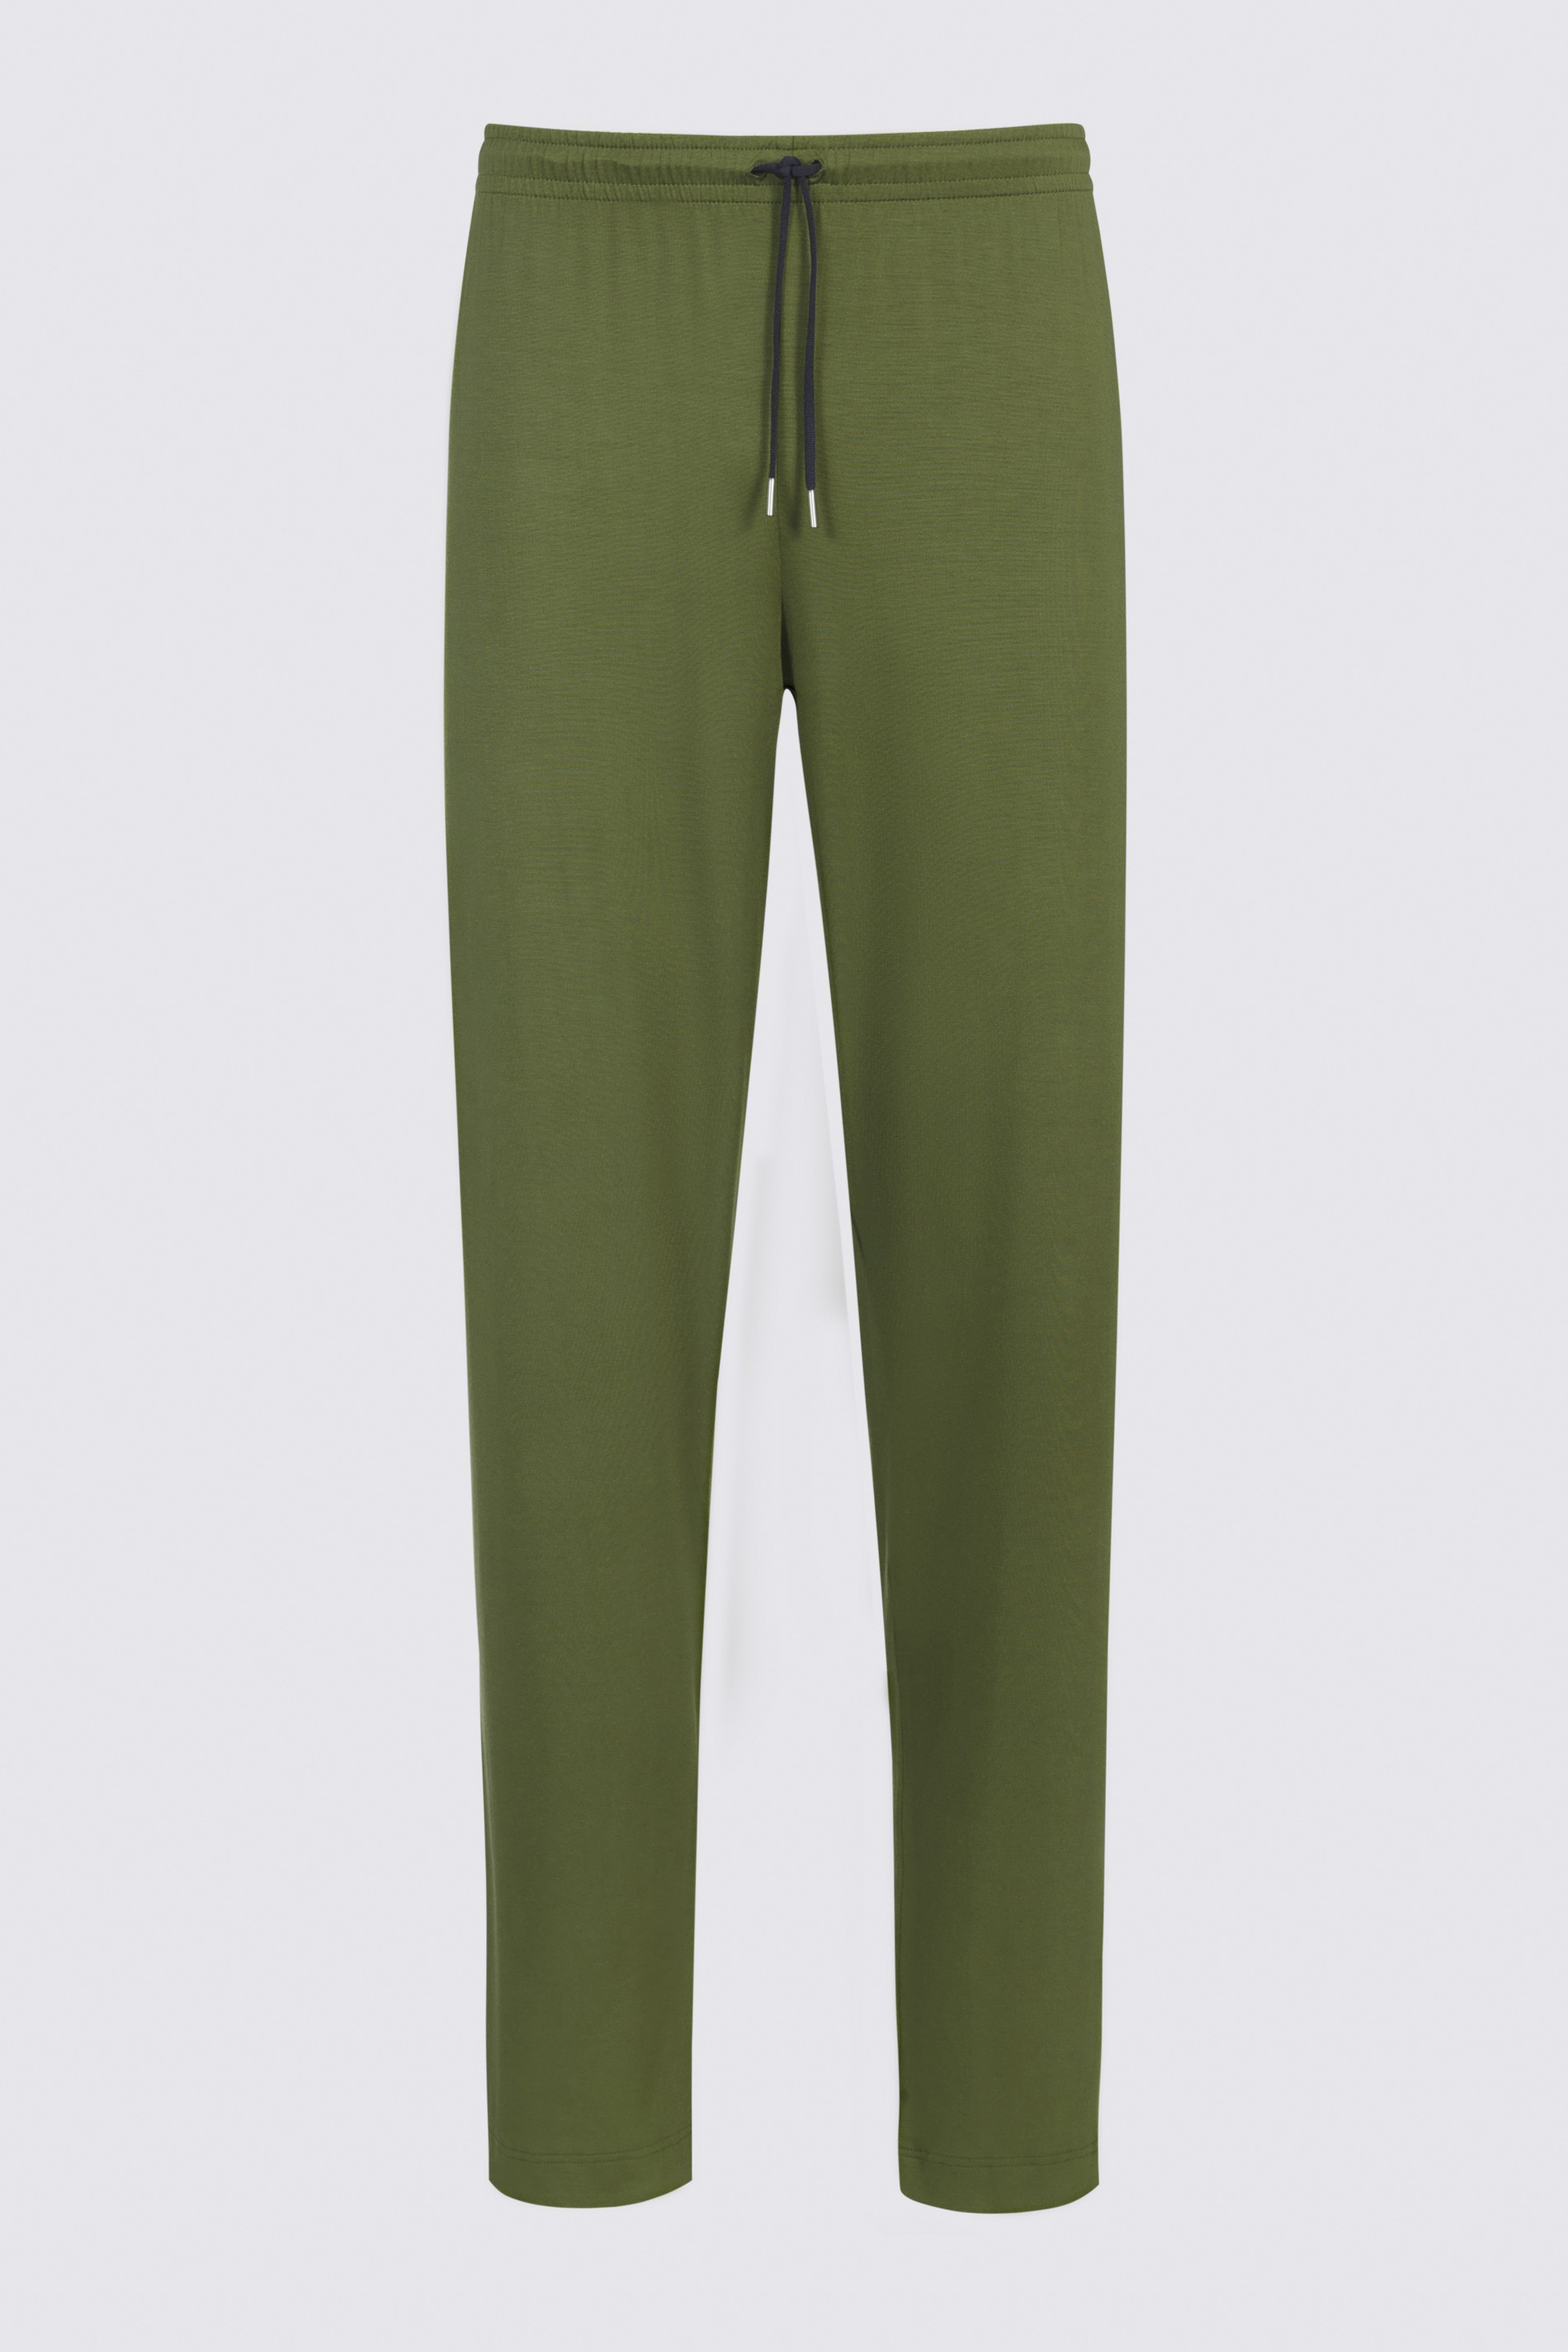 Long pants Serie Jefferson Modal Cut Out | mey®